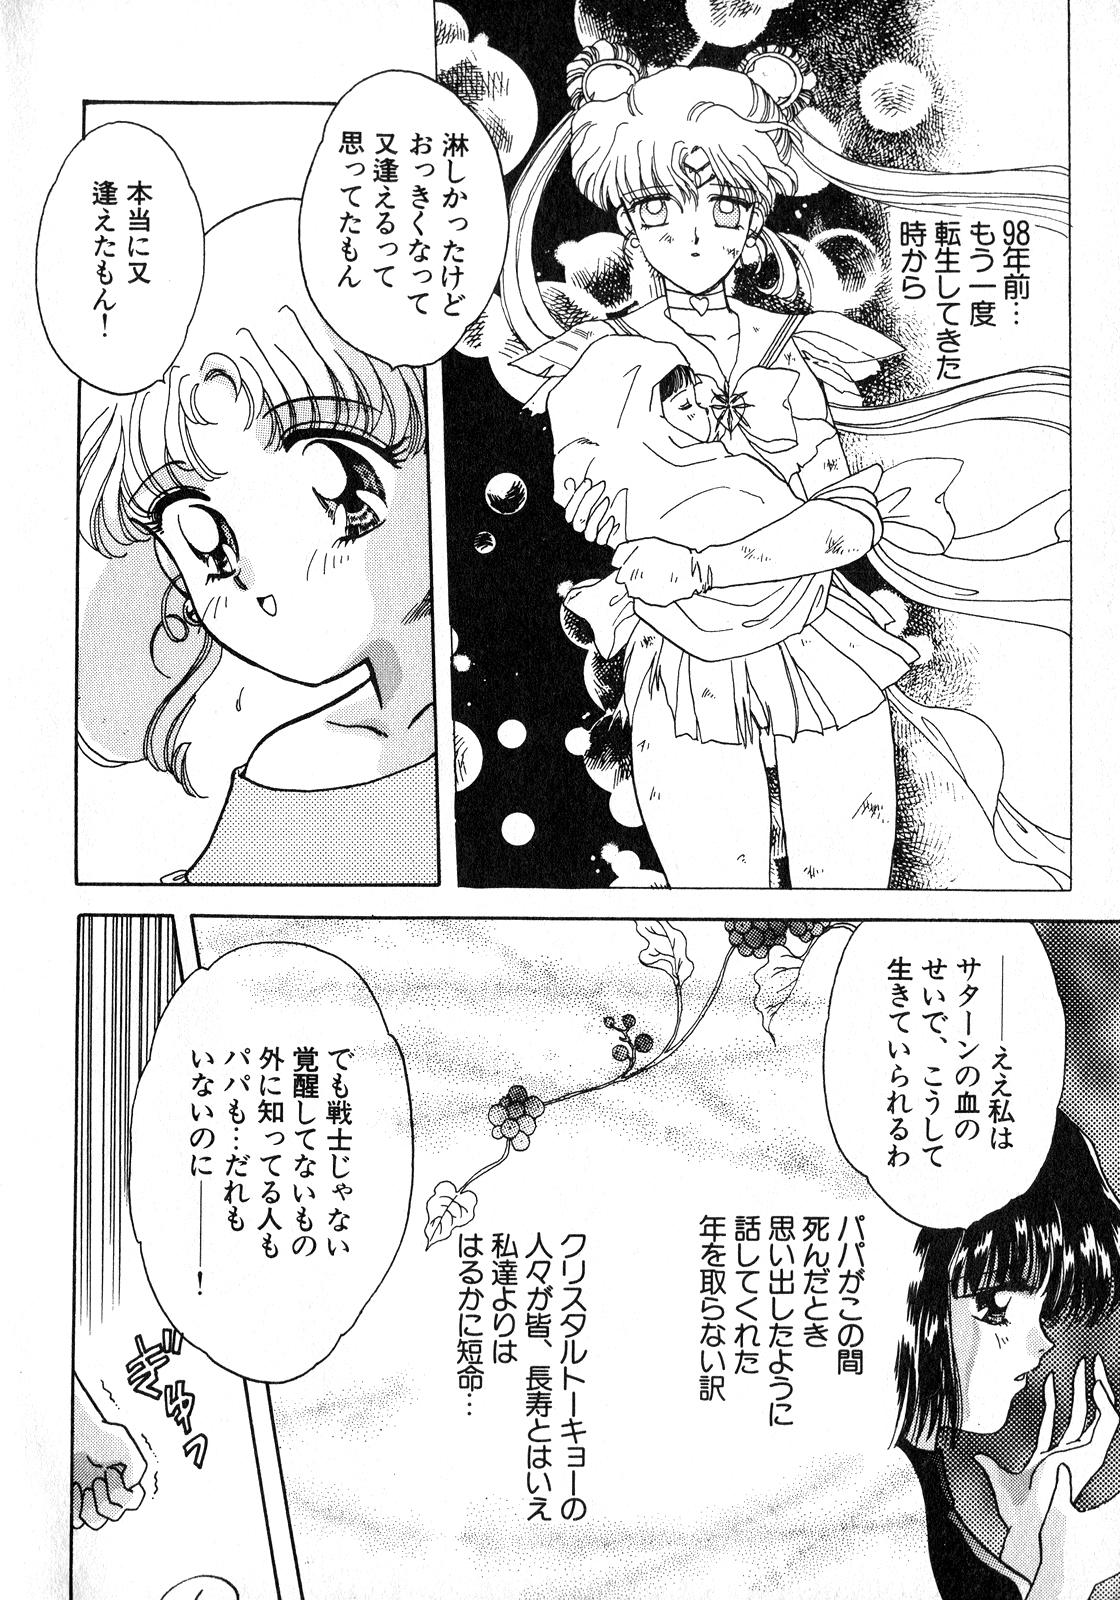 Gangbang Lunatic Party 8 - Sailor moon Gaping - Page 7